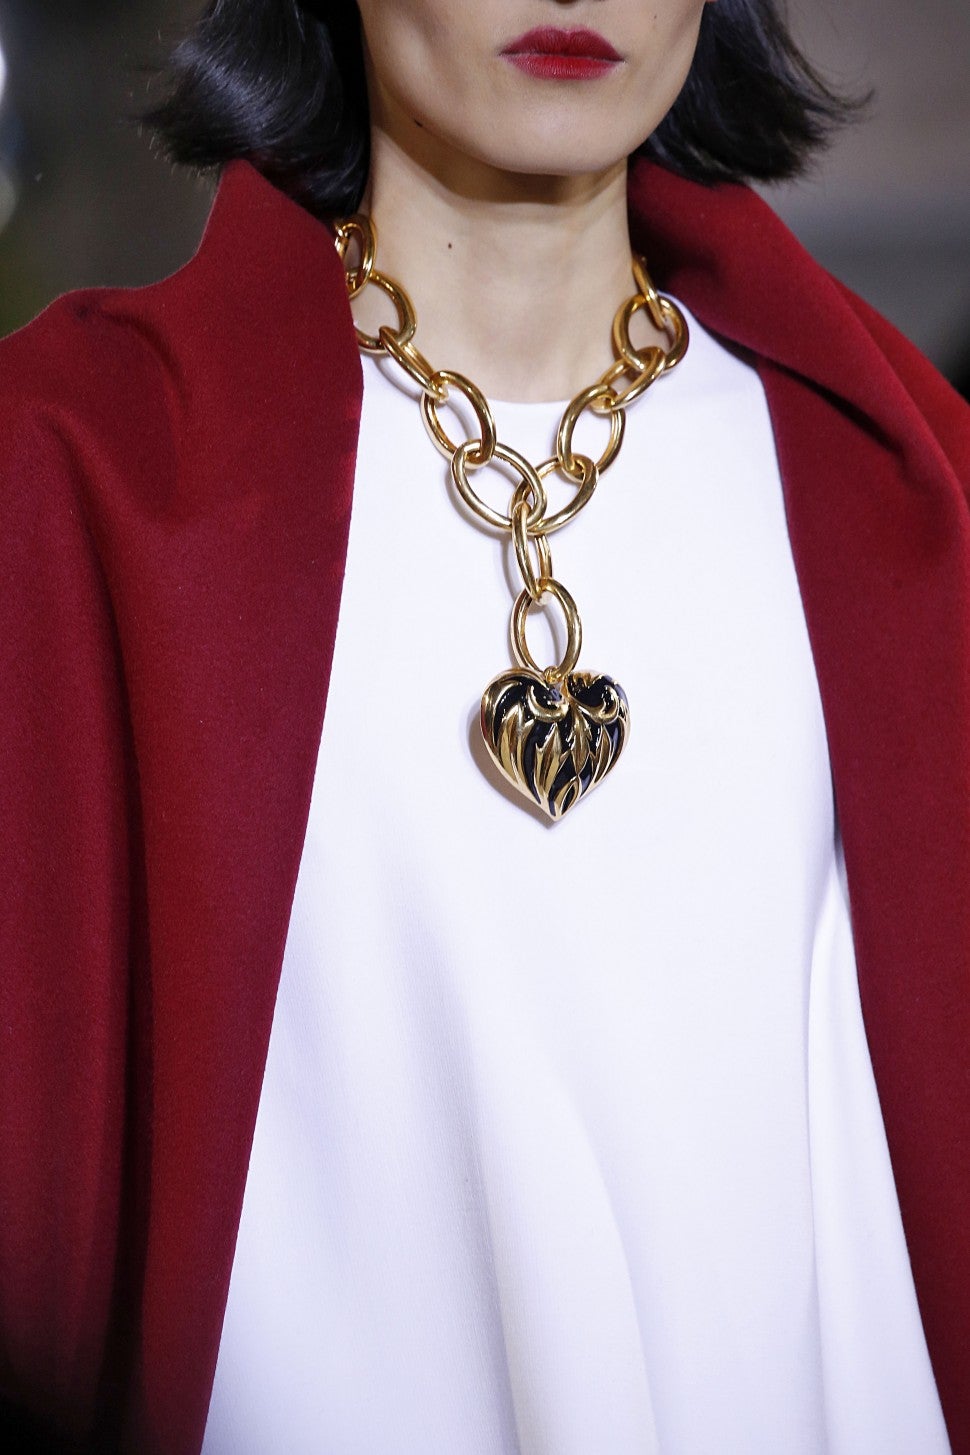 Oscar de la Renta fall 2019 jewelry chain necklace